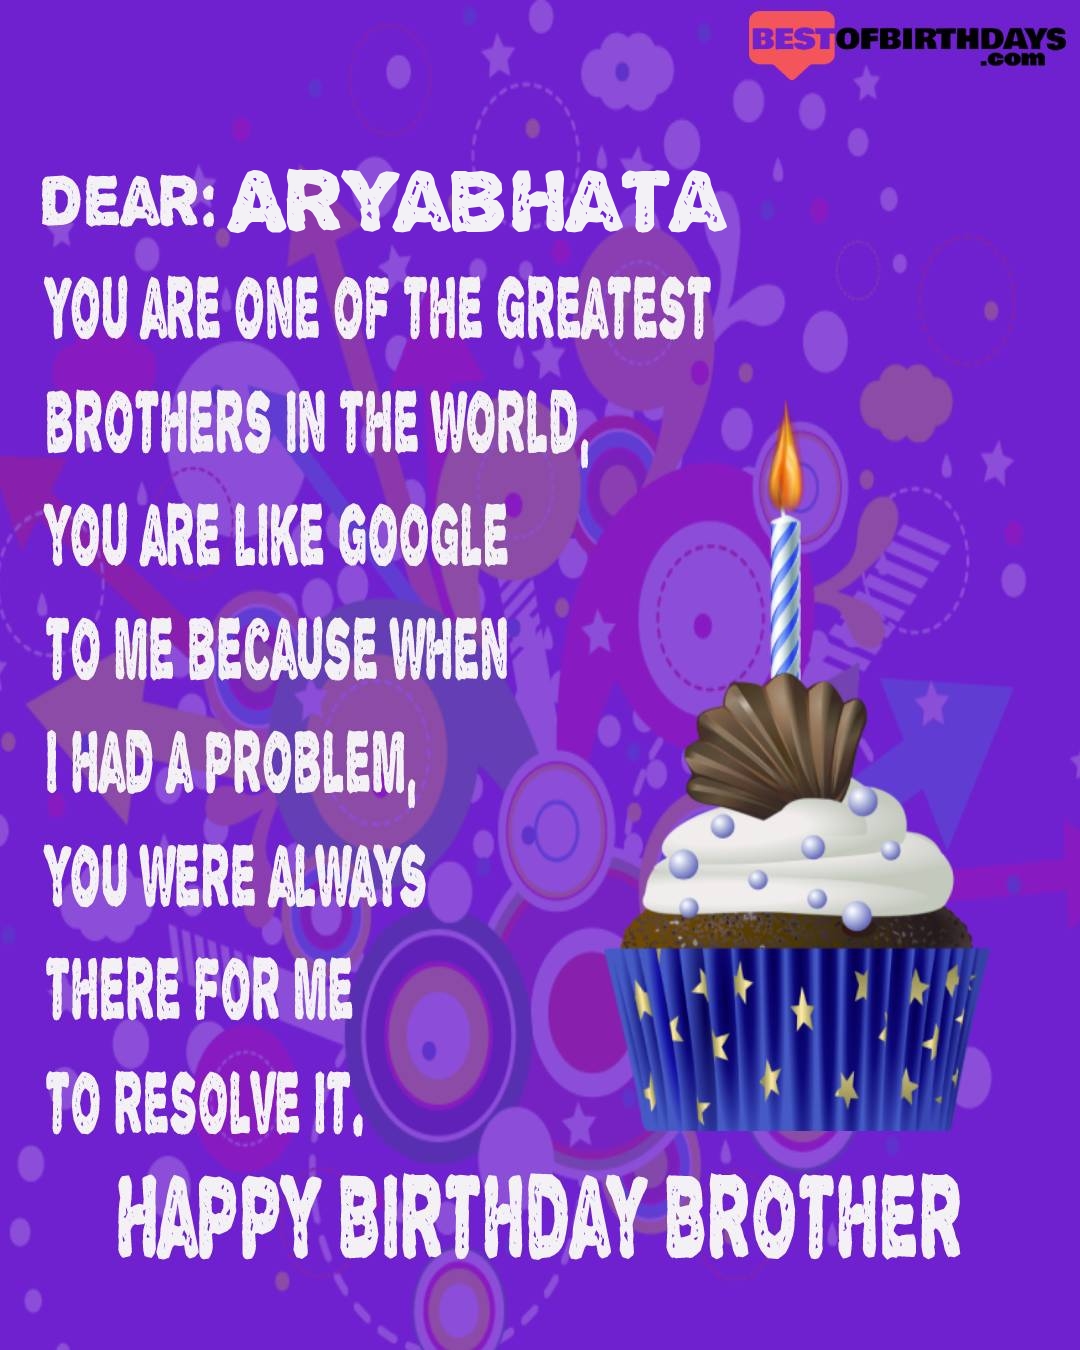 Happy birthday aryabhata bhai brother bro